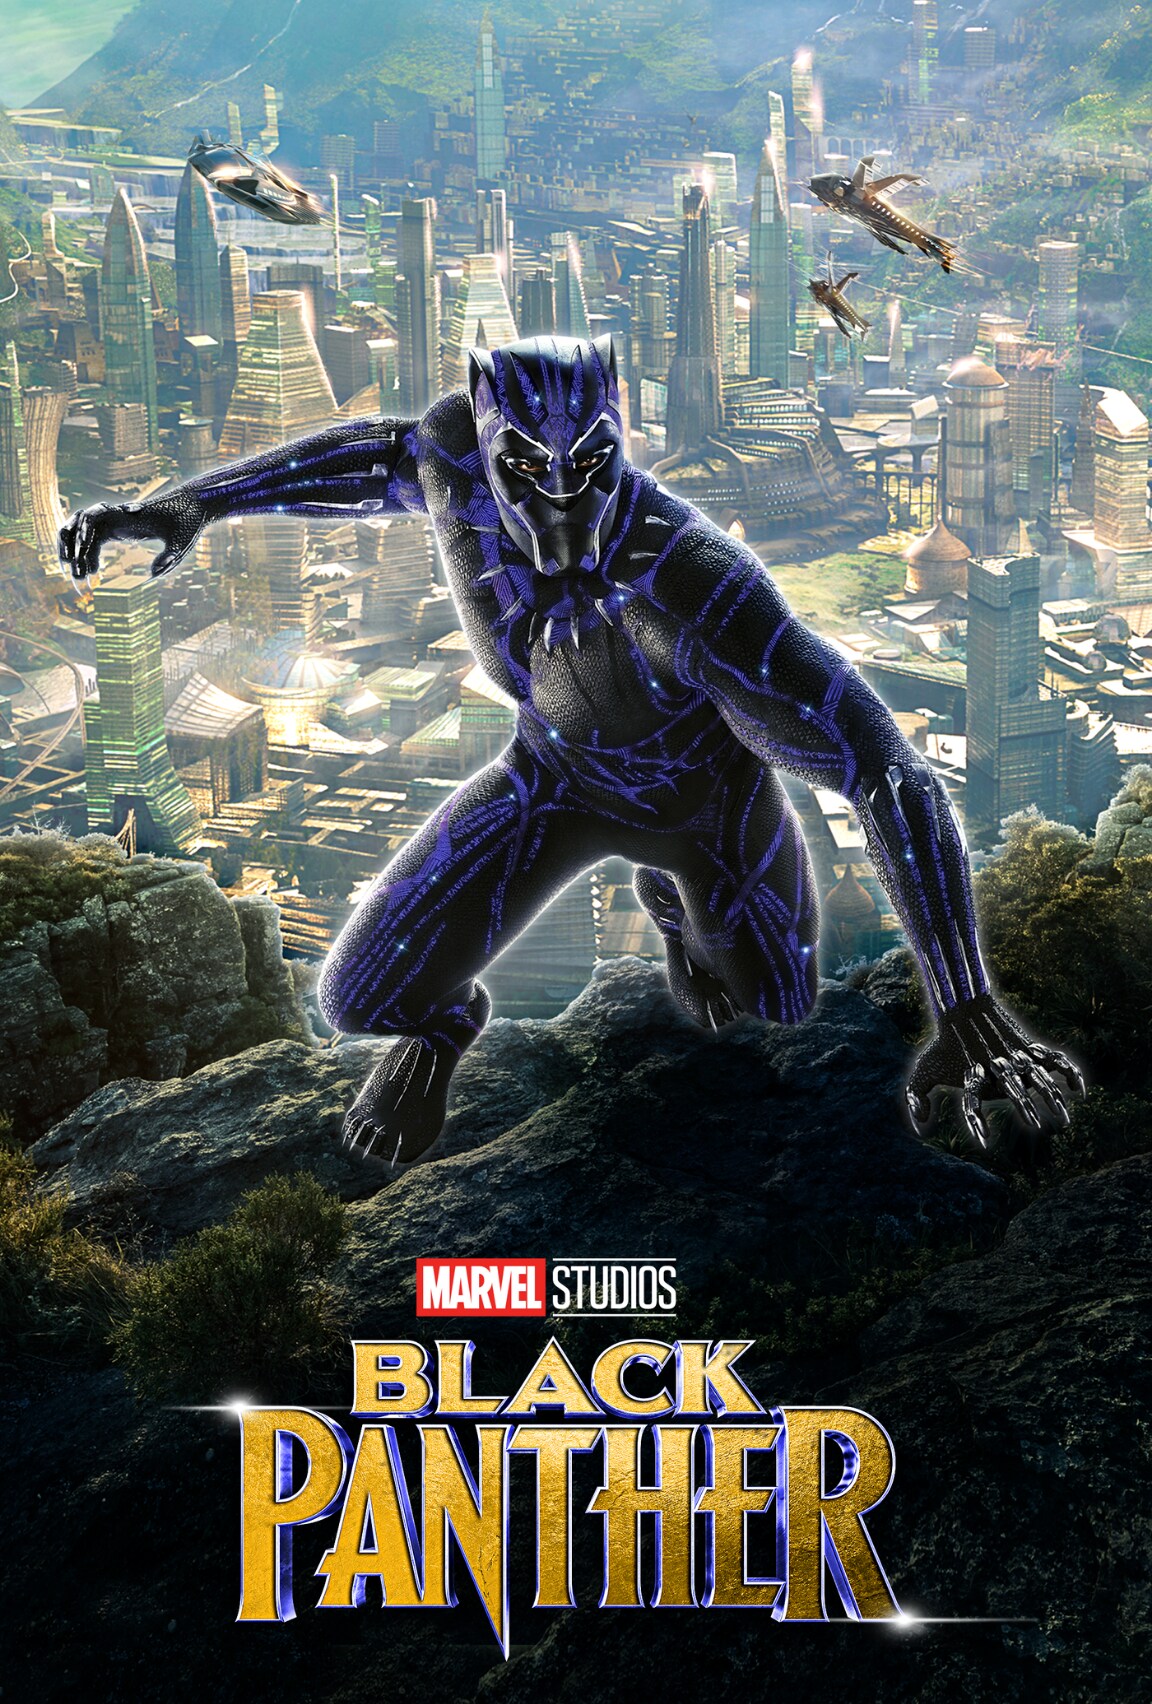 Marvel Studios' Black Panther poster